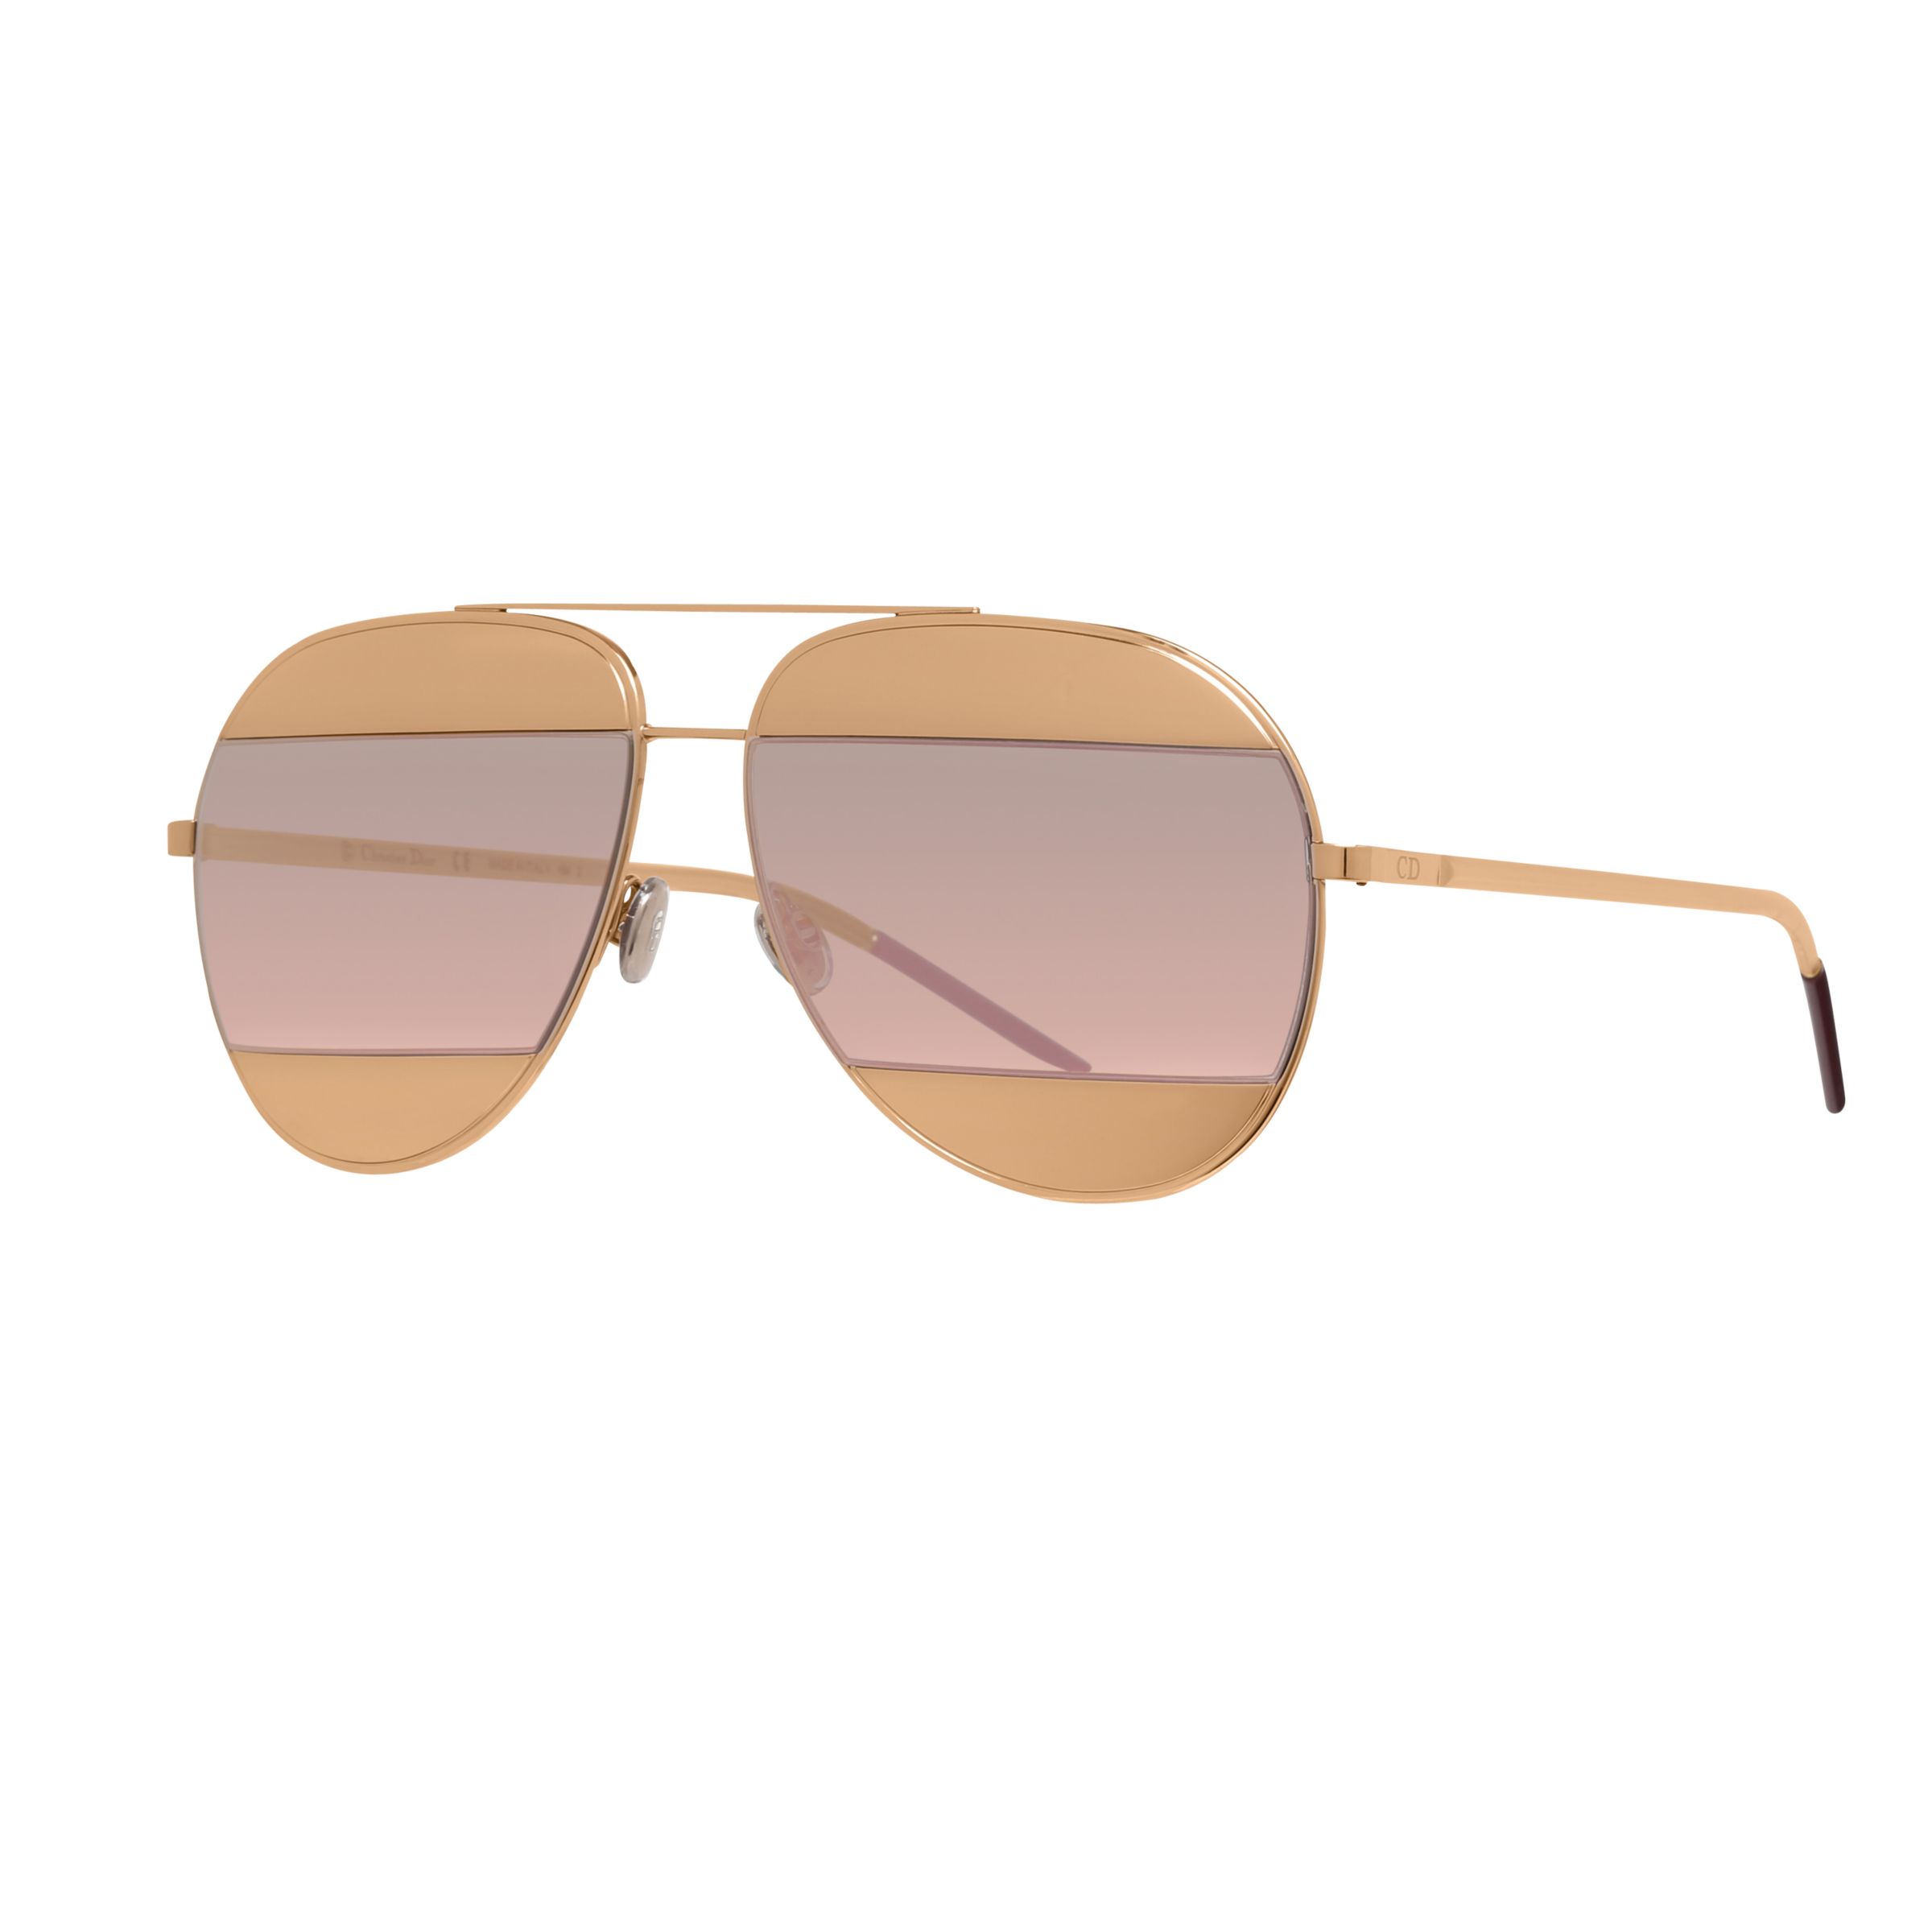 Dior Diorsplit1 Aviator Sunglasses, Gold/Blush at John Lewis & Partners